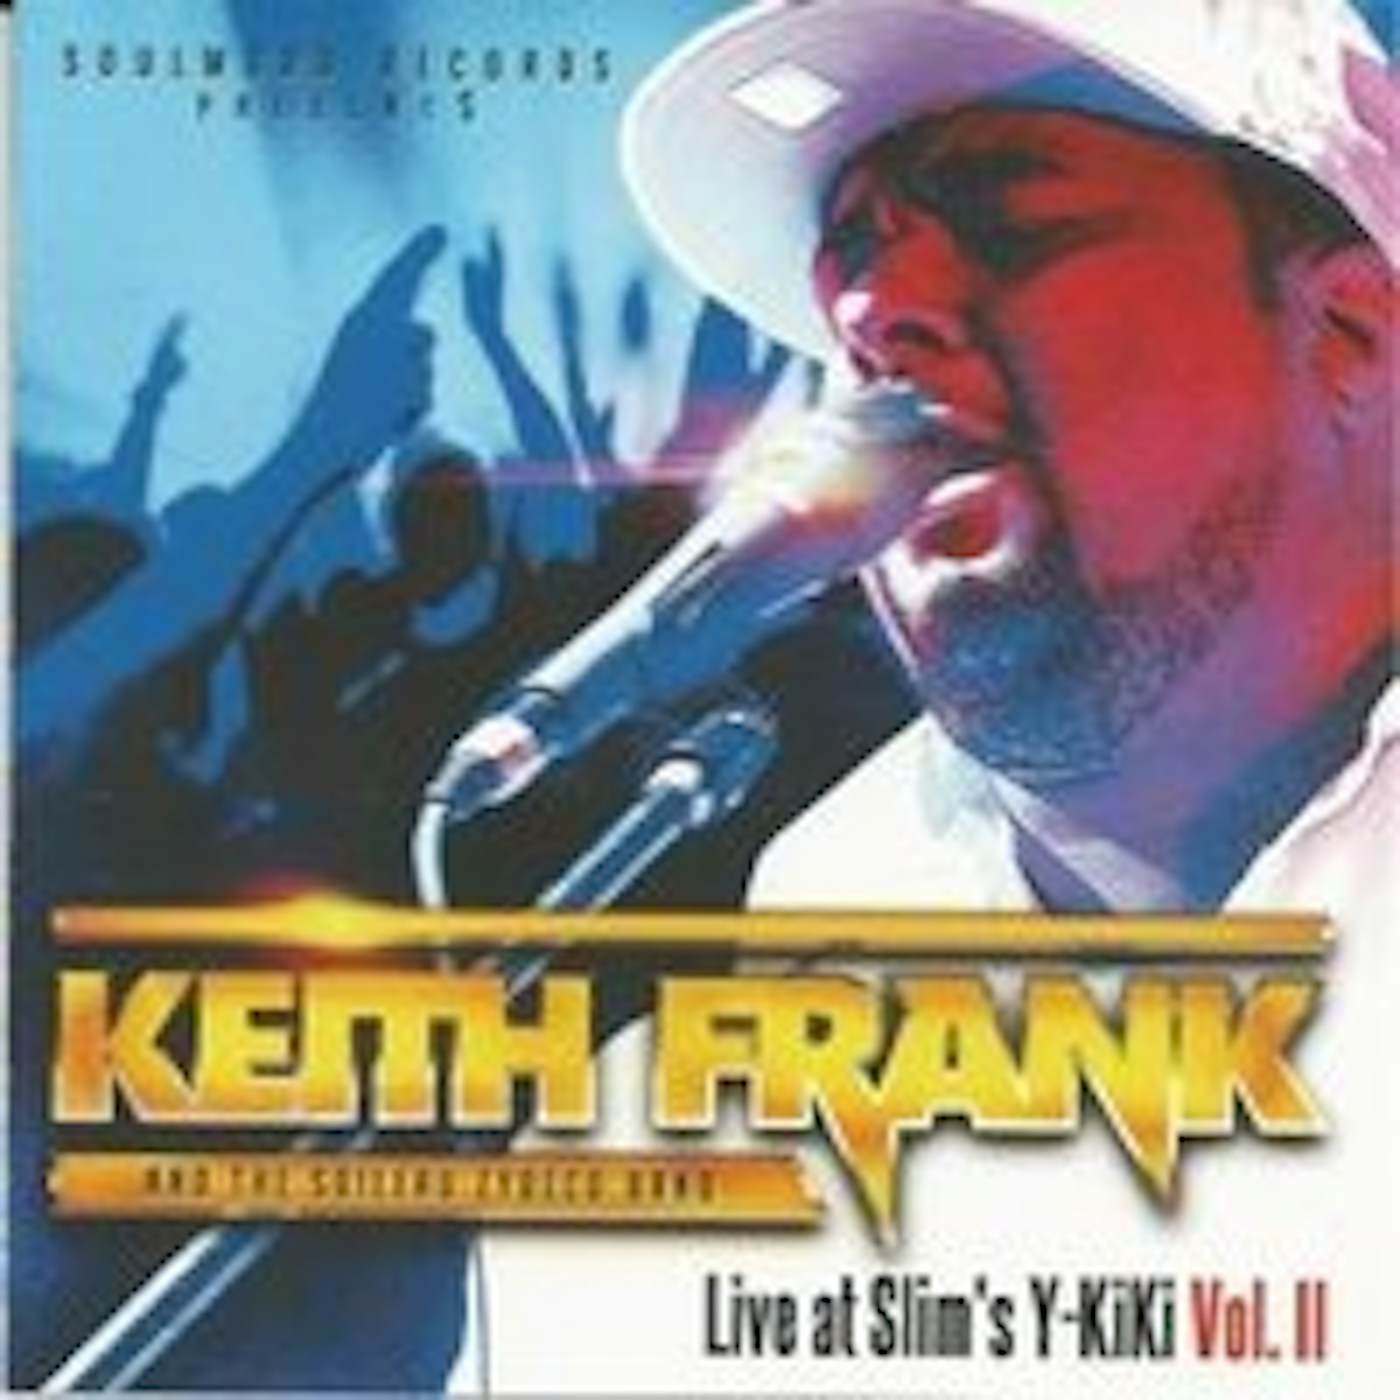 Keith Frank LIVE AT SLIMS Y KI KI VOL. II CD